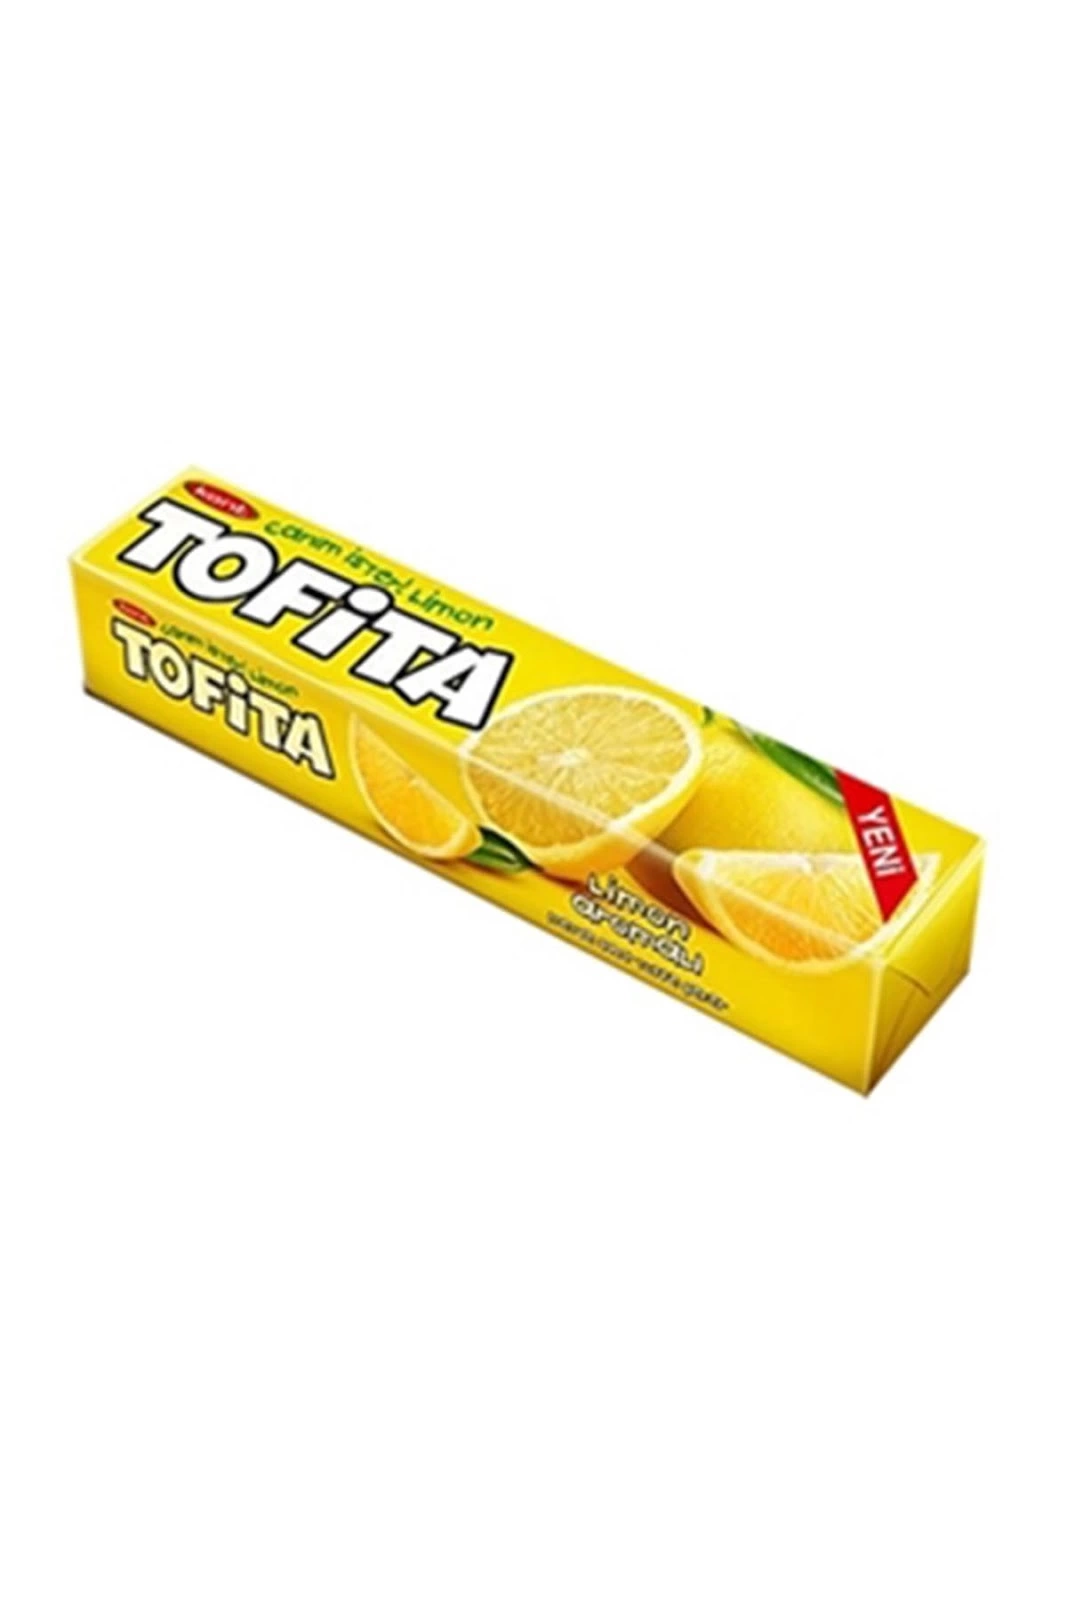 Kent Tofita Limon Ar Ml Toffee Şeker 47 Gr